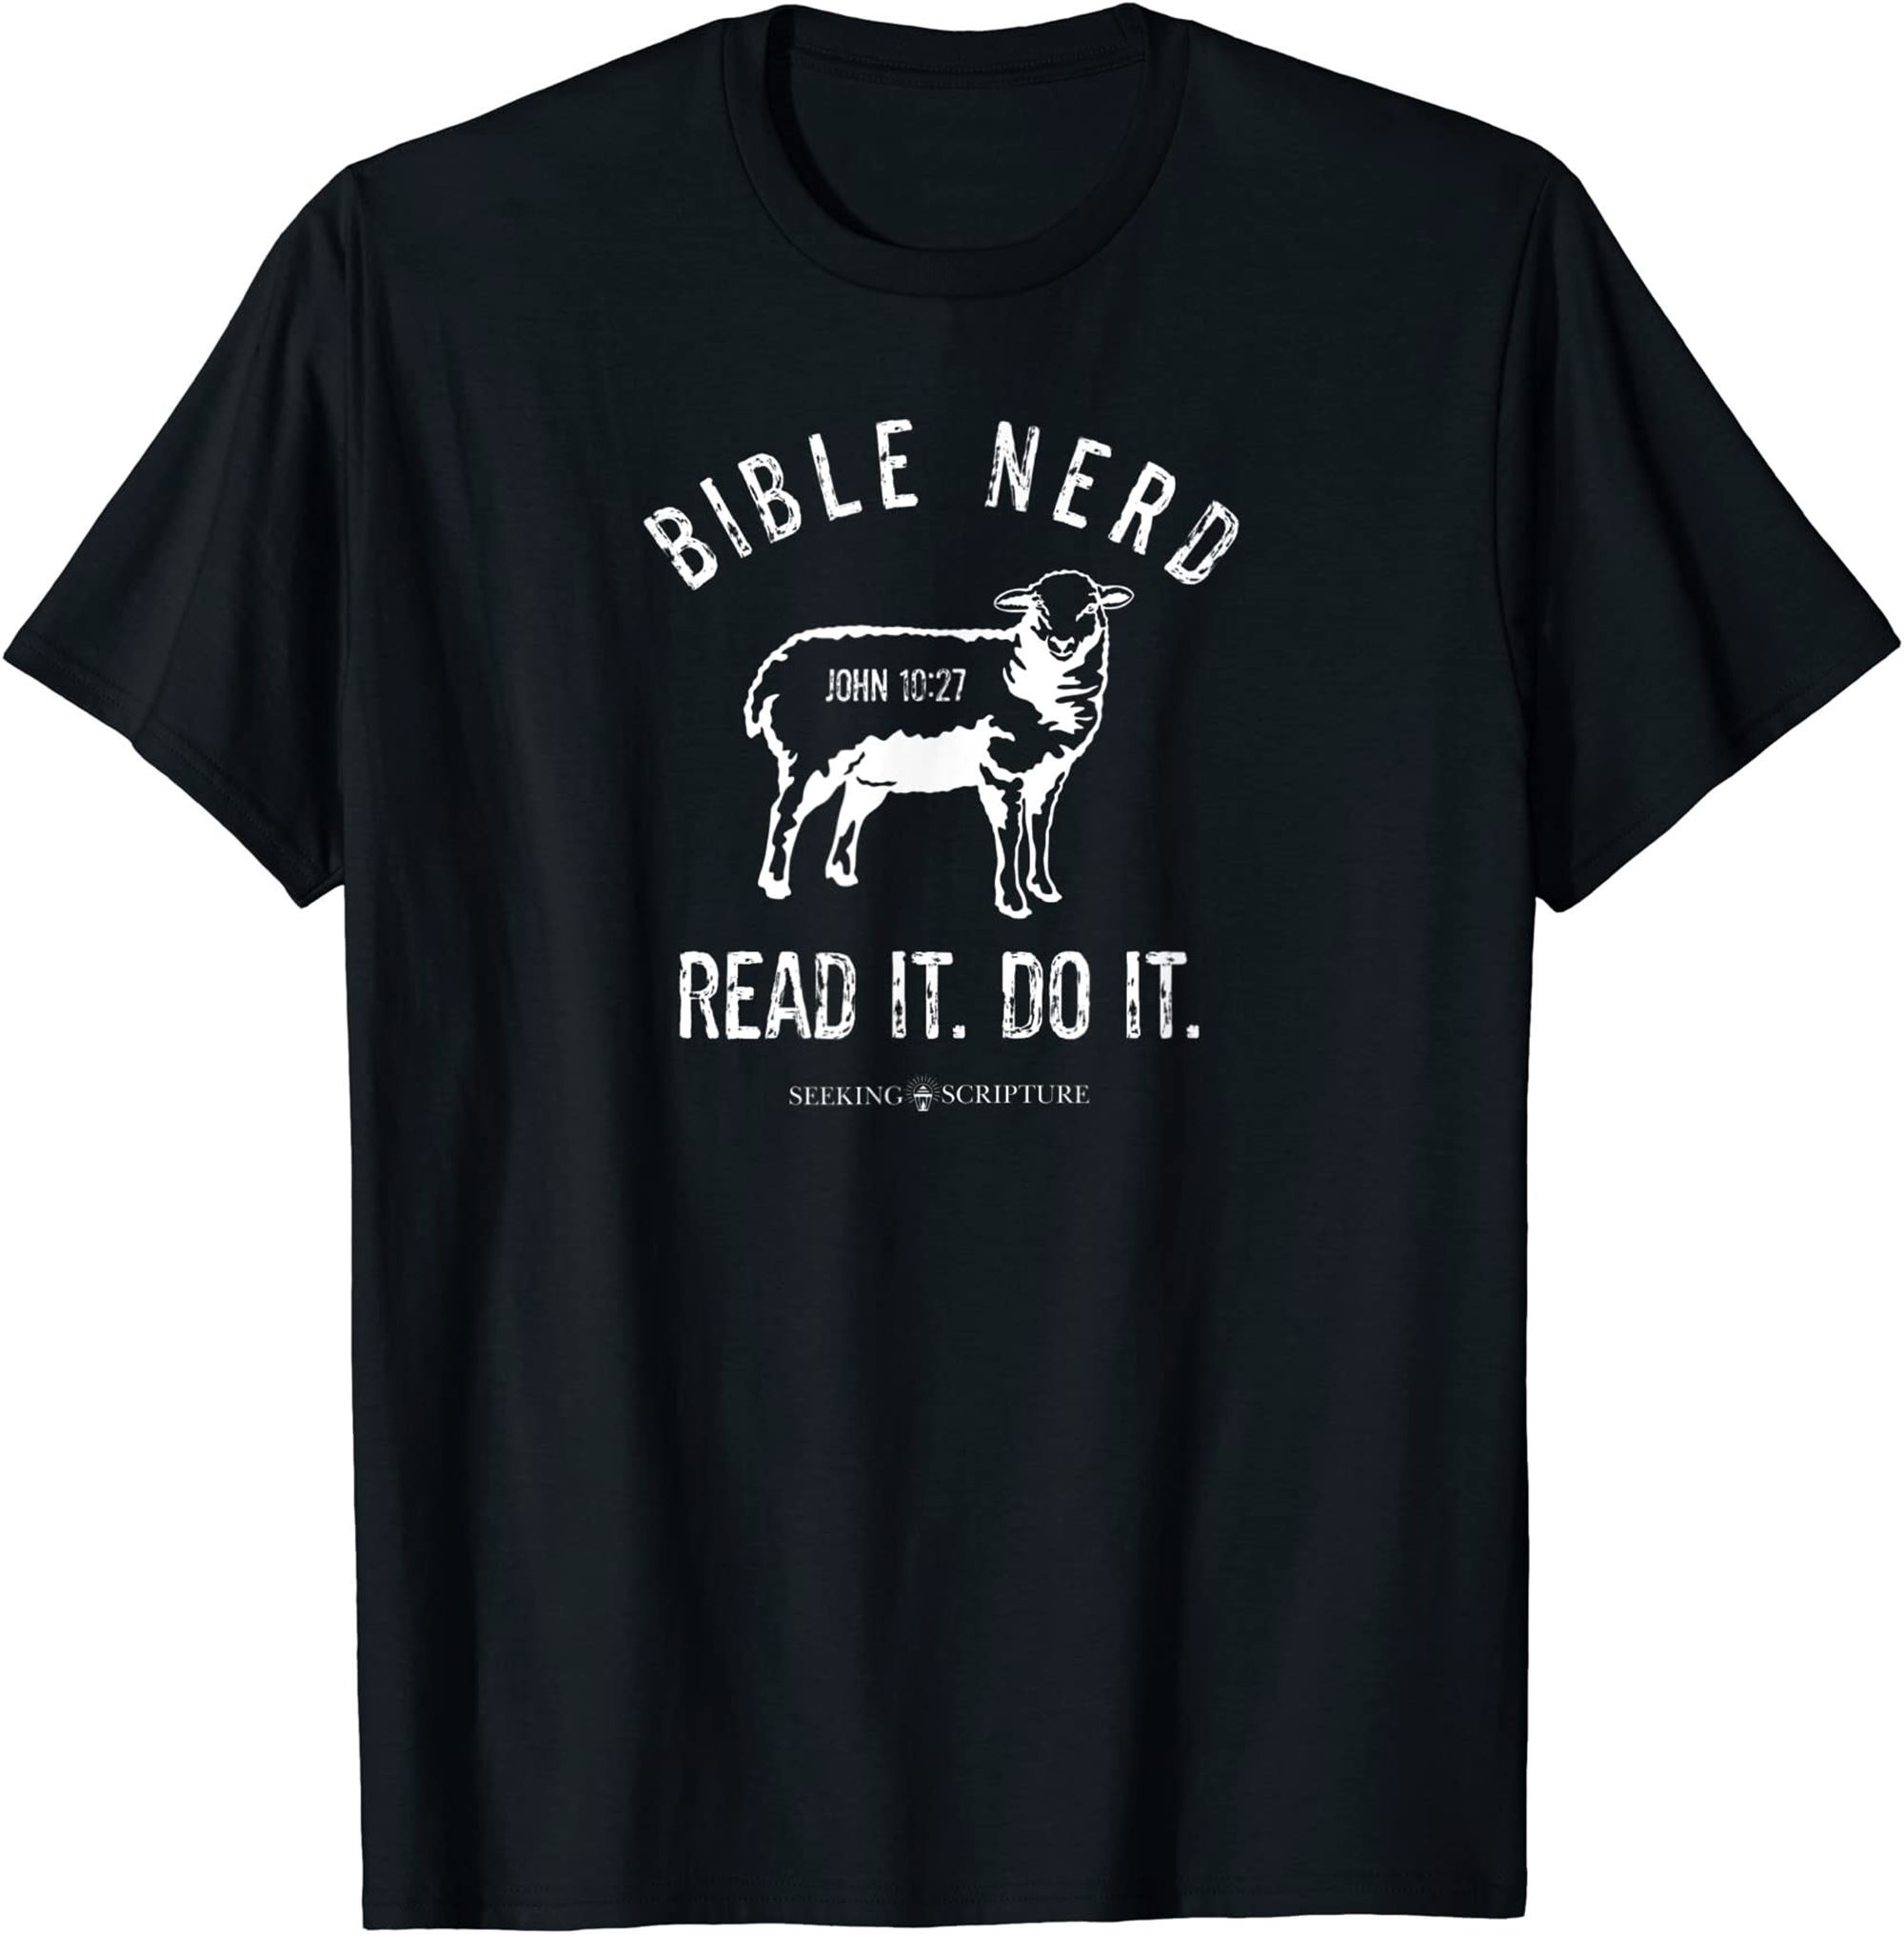 Bible Nerd T-shirt Size Up To 5xl